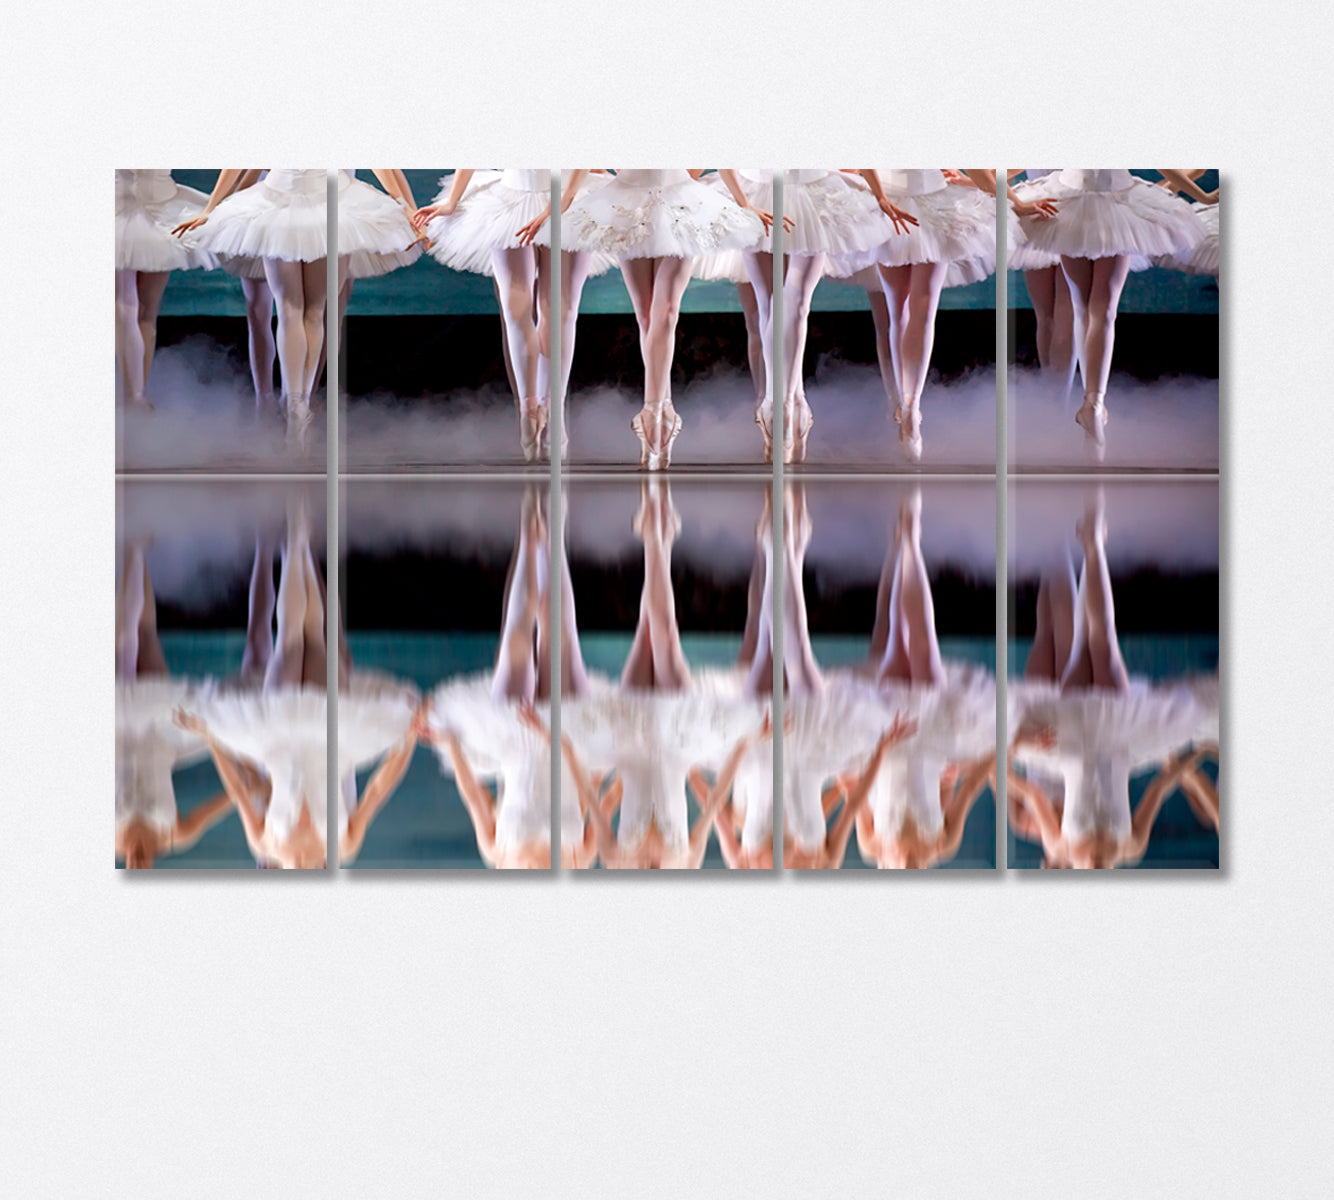 Graceful Legs of Ballerinas Canvas Print-Canvas Print-CetArt-5 Panels-36x24 inches-CetArt